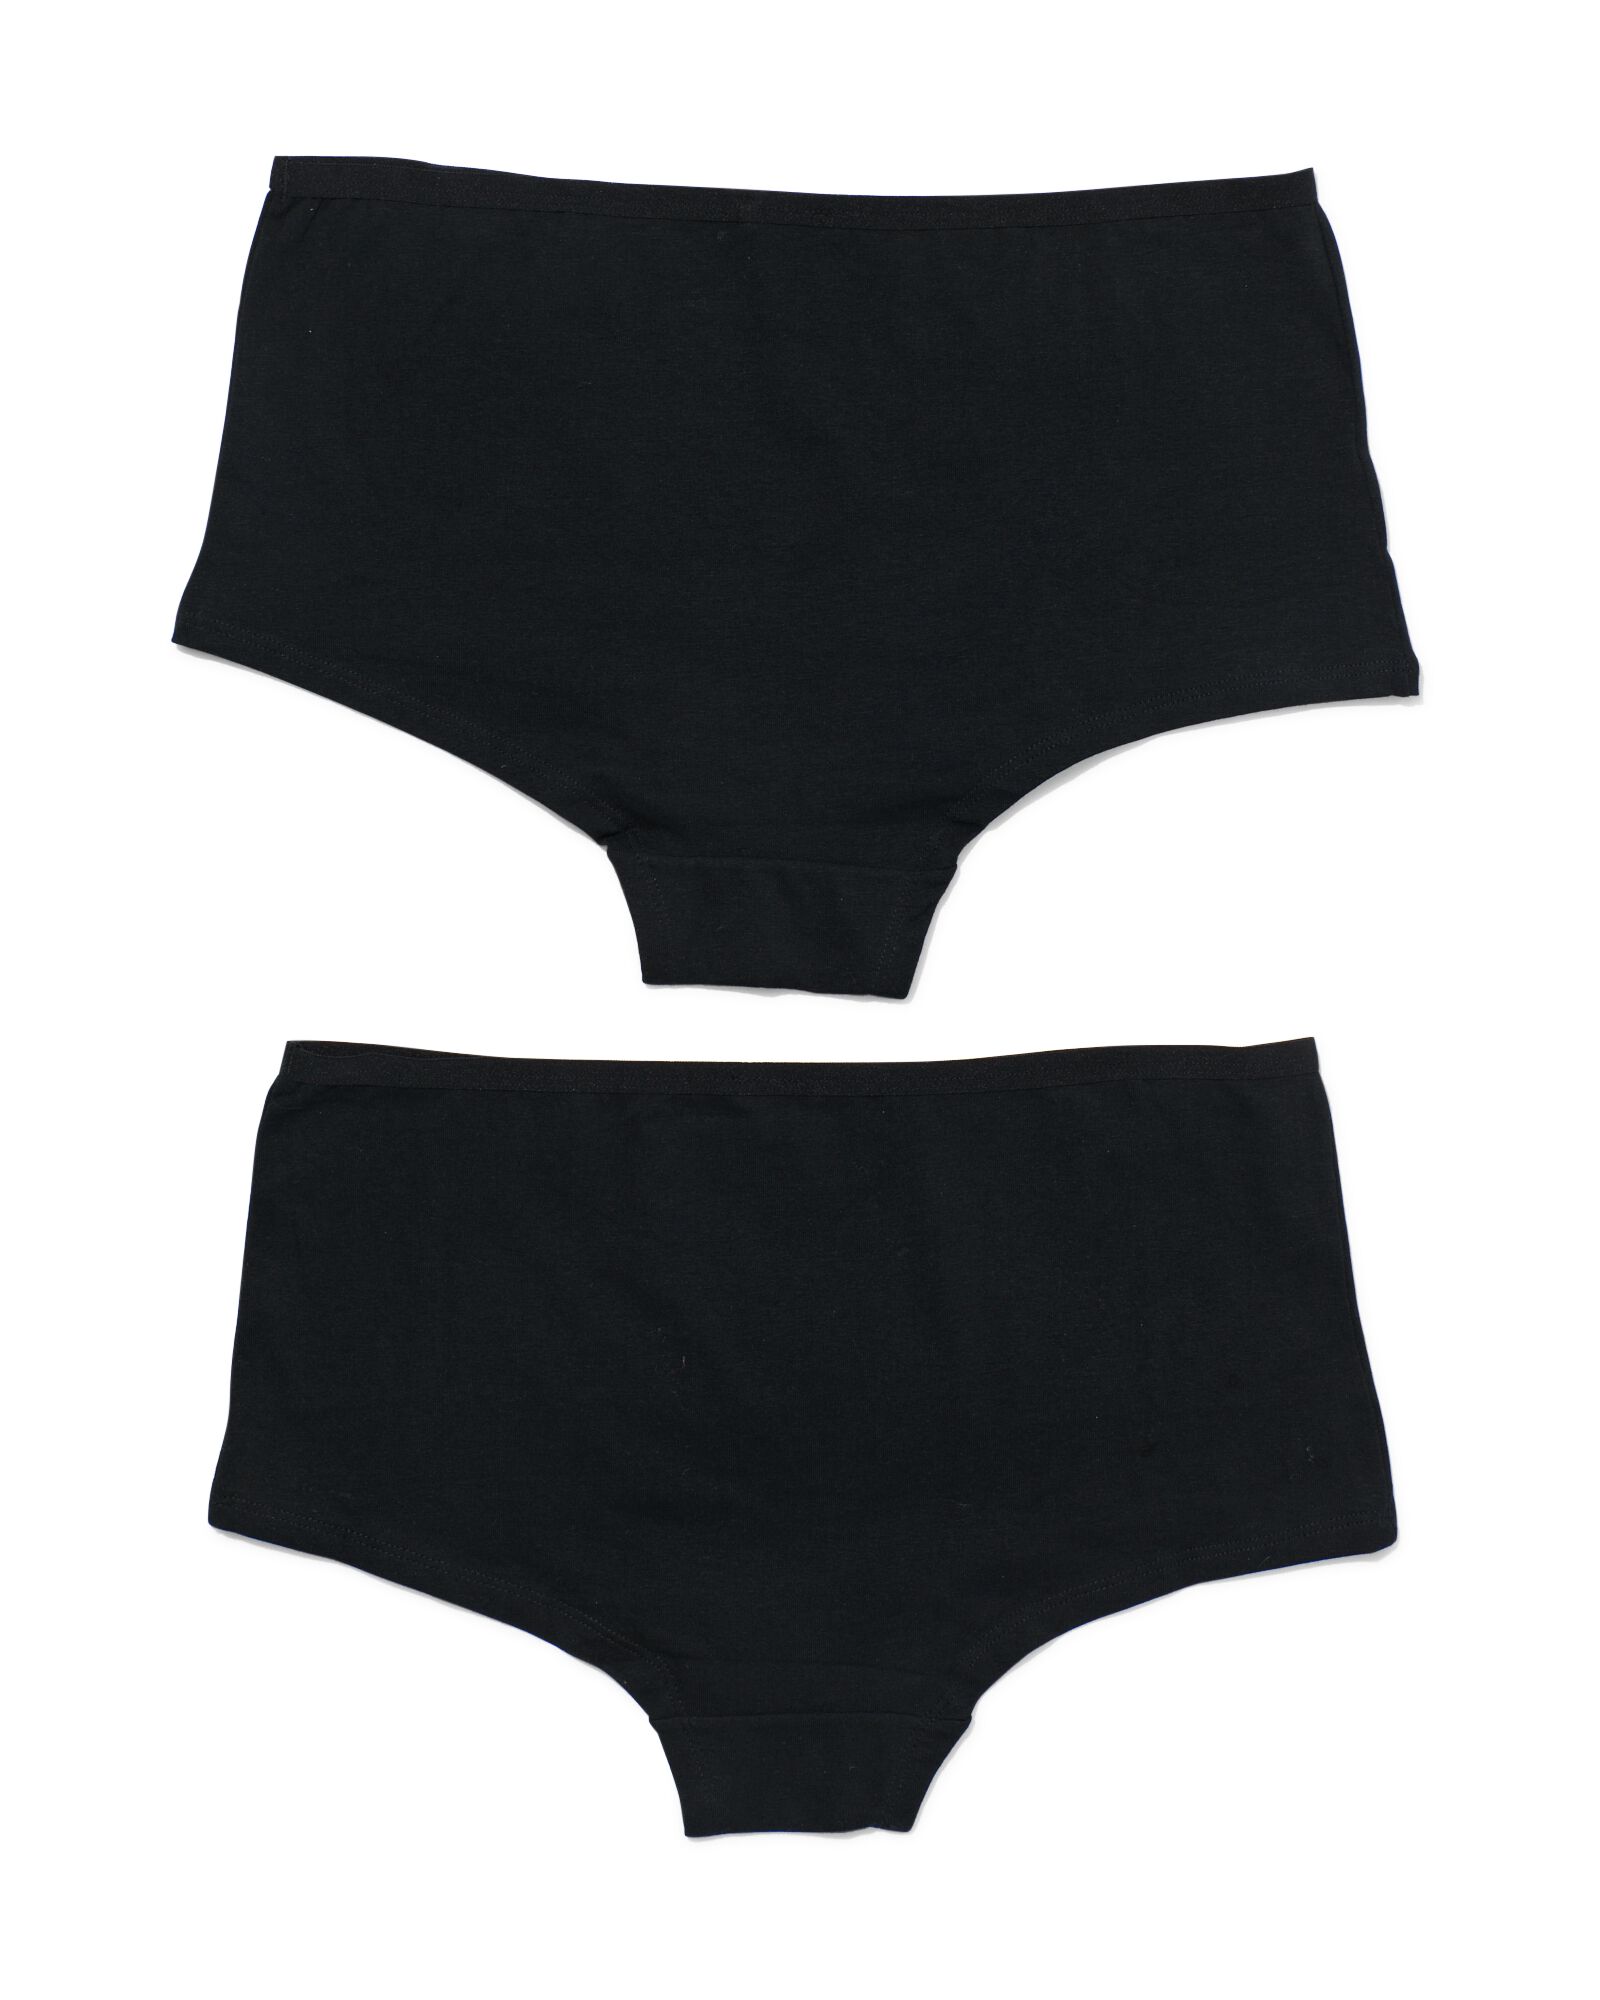 dames shorties stretch katoen - 2 stuks zwart XL - 19690914 - HEMA